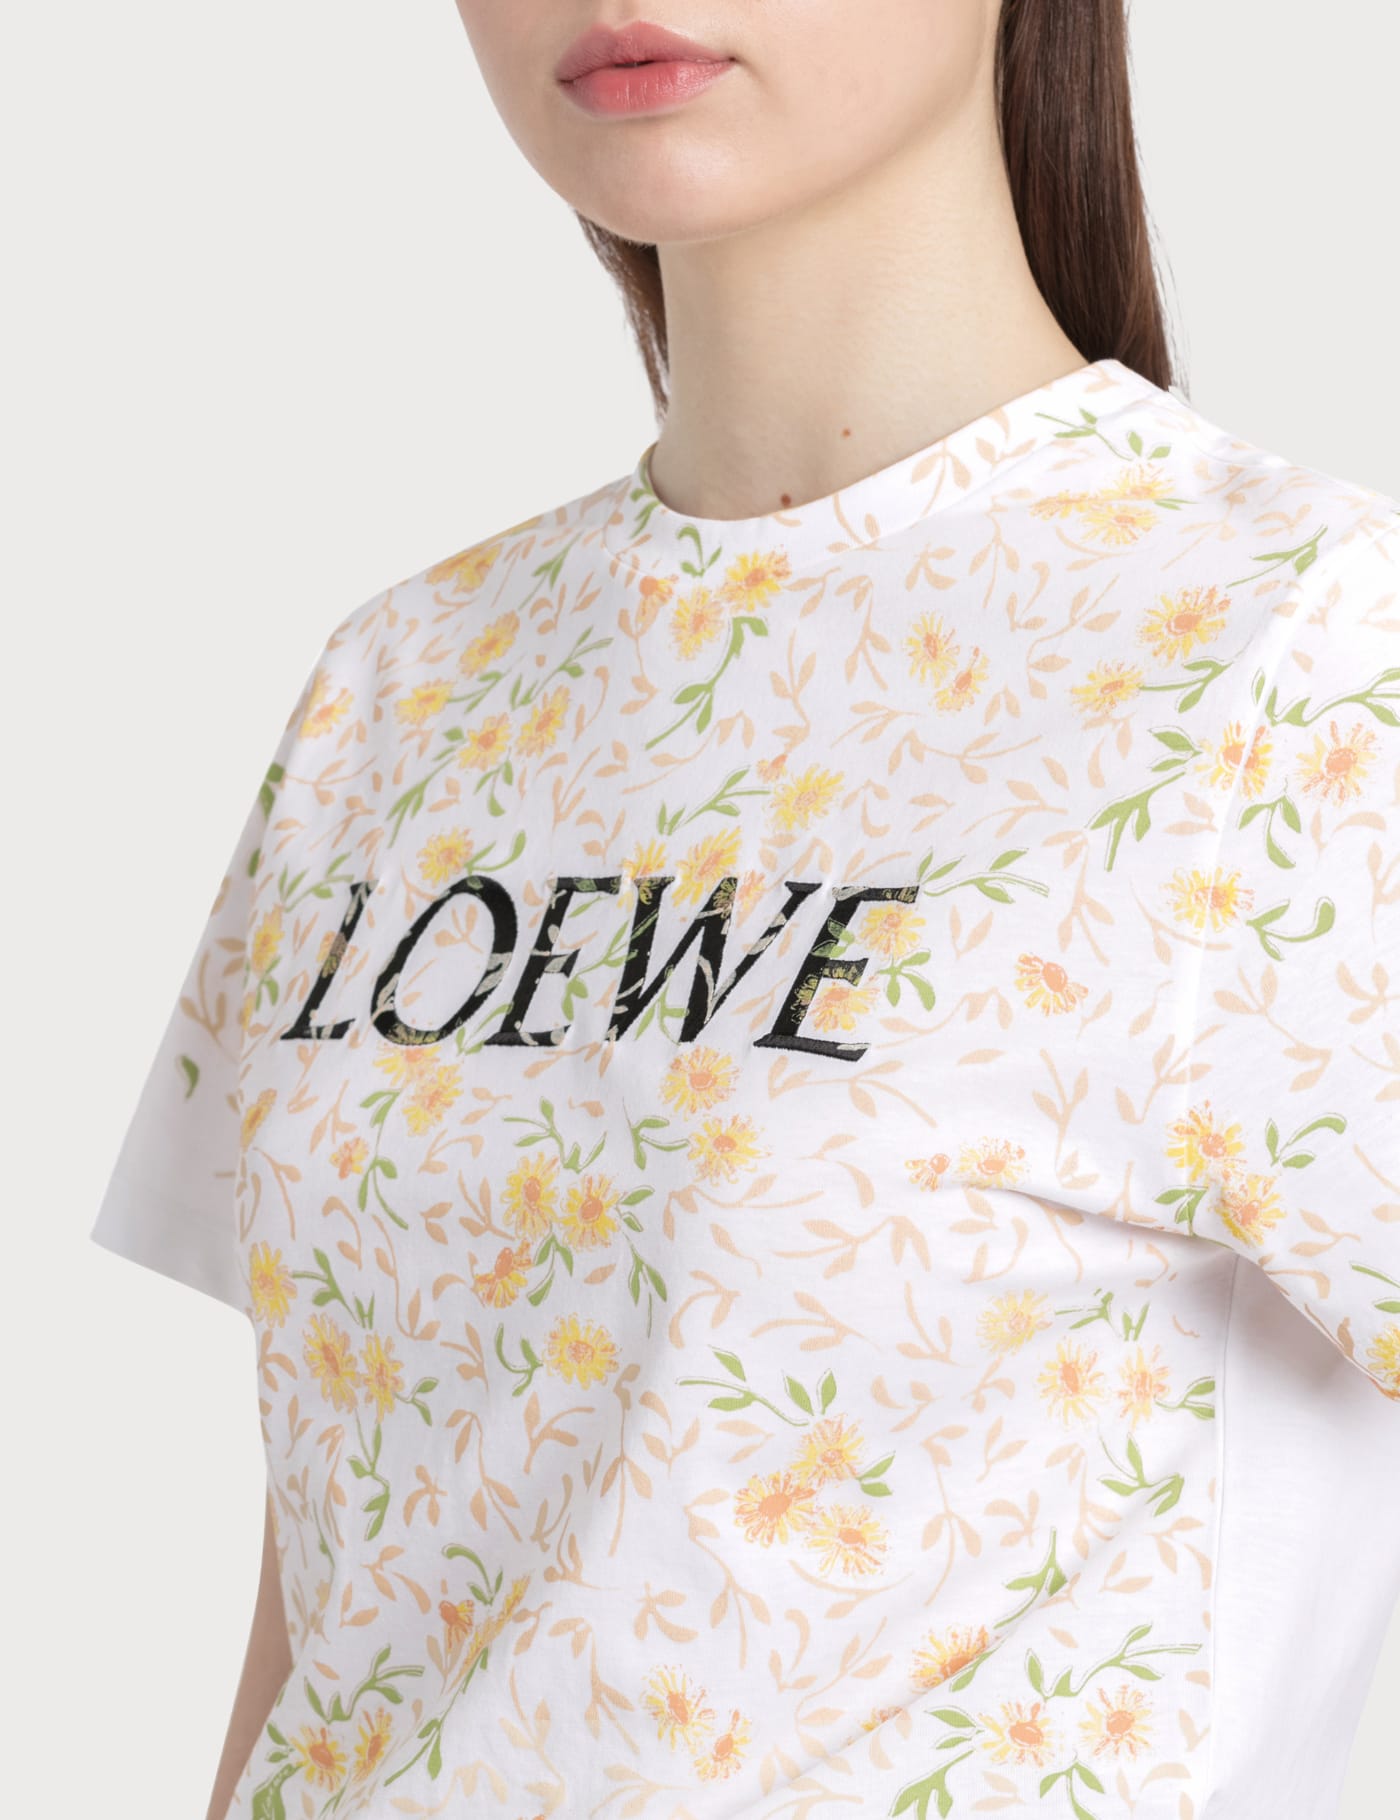 loewe flower t shirt